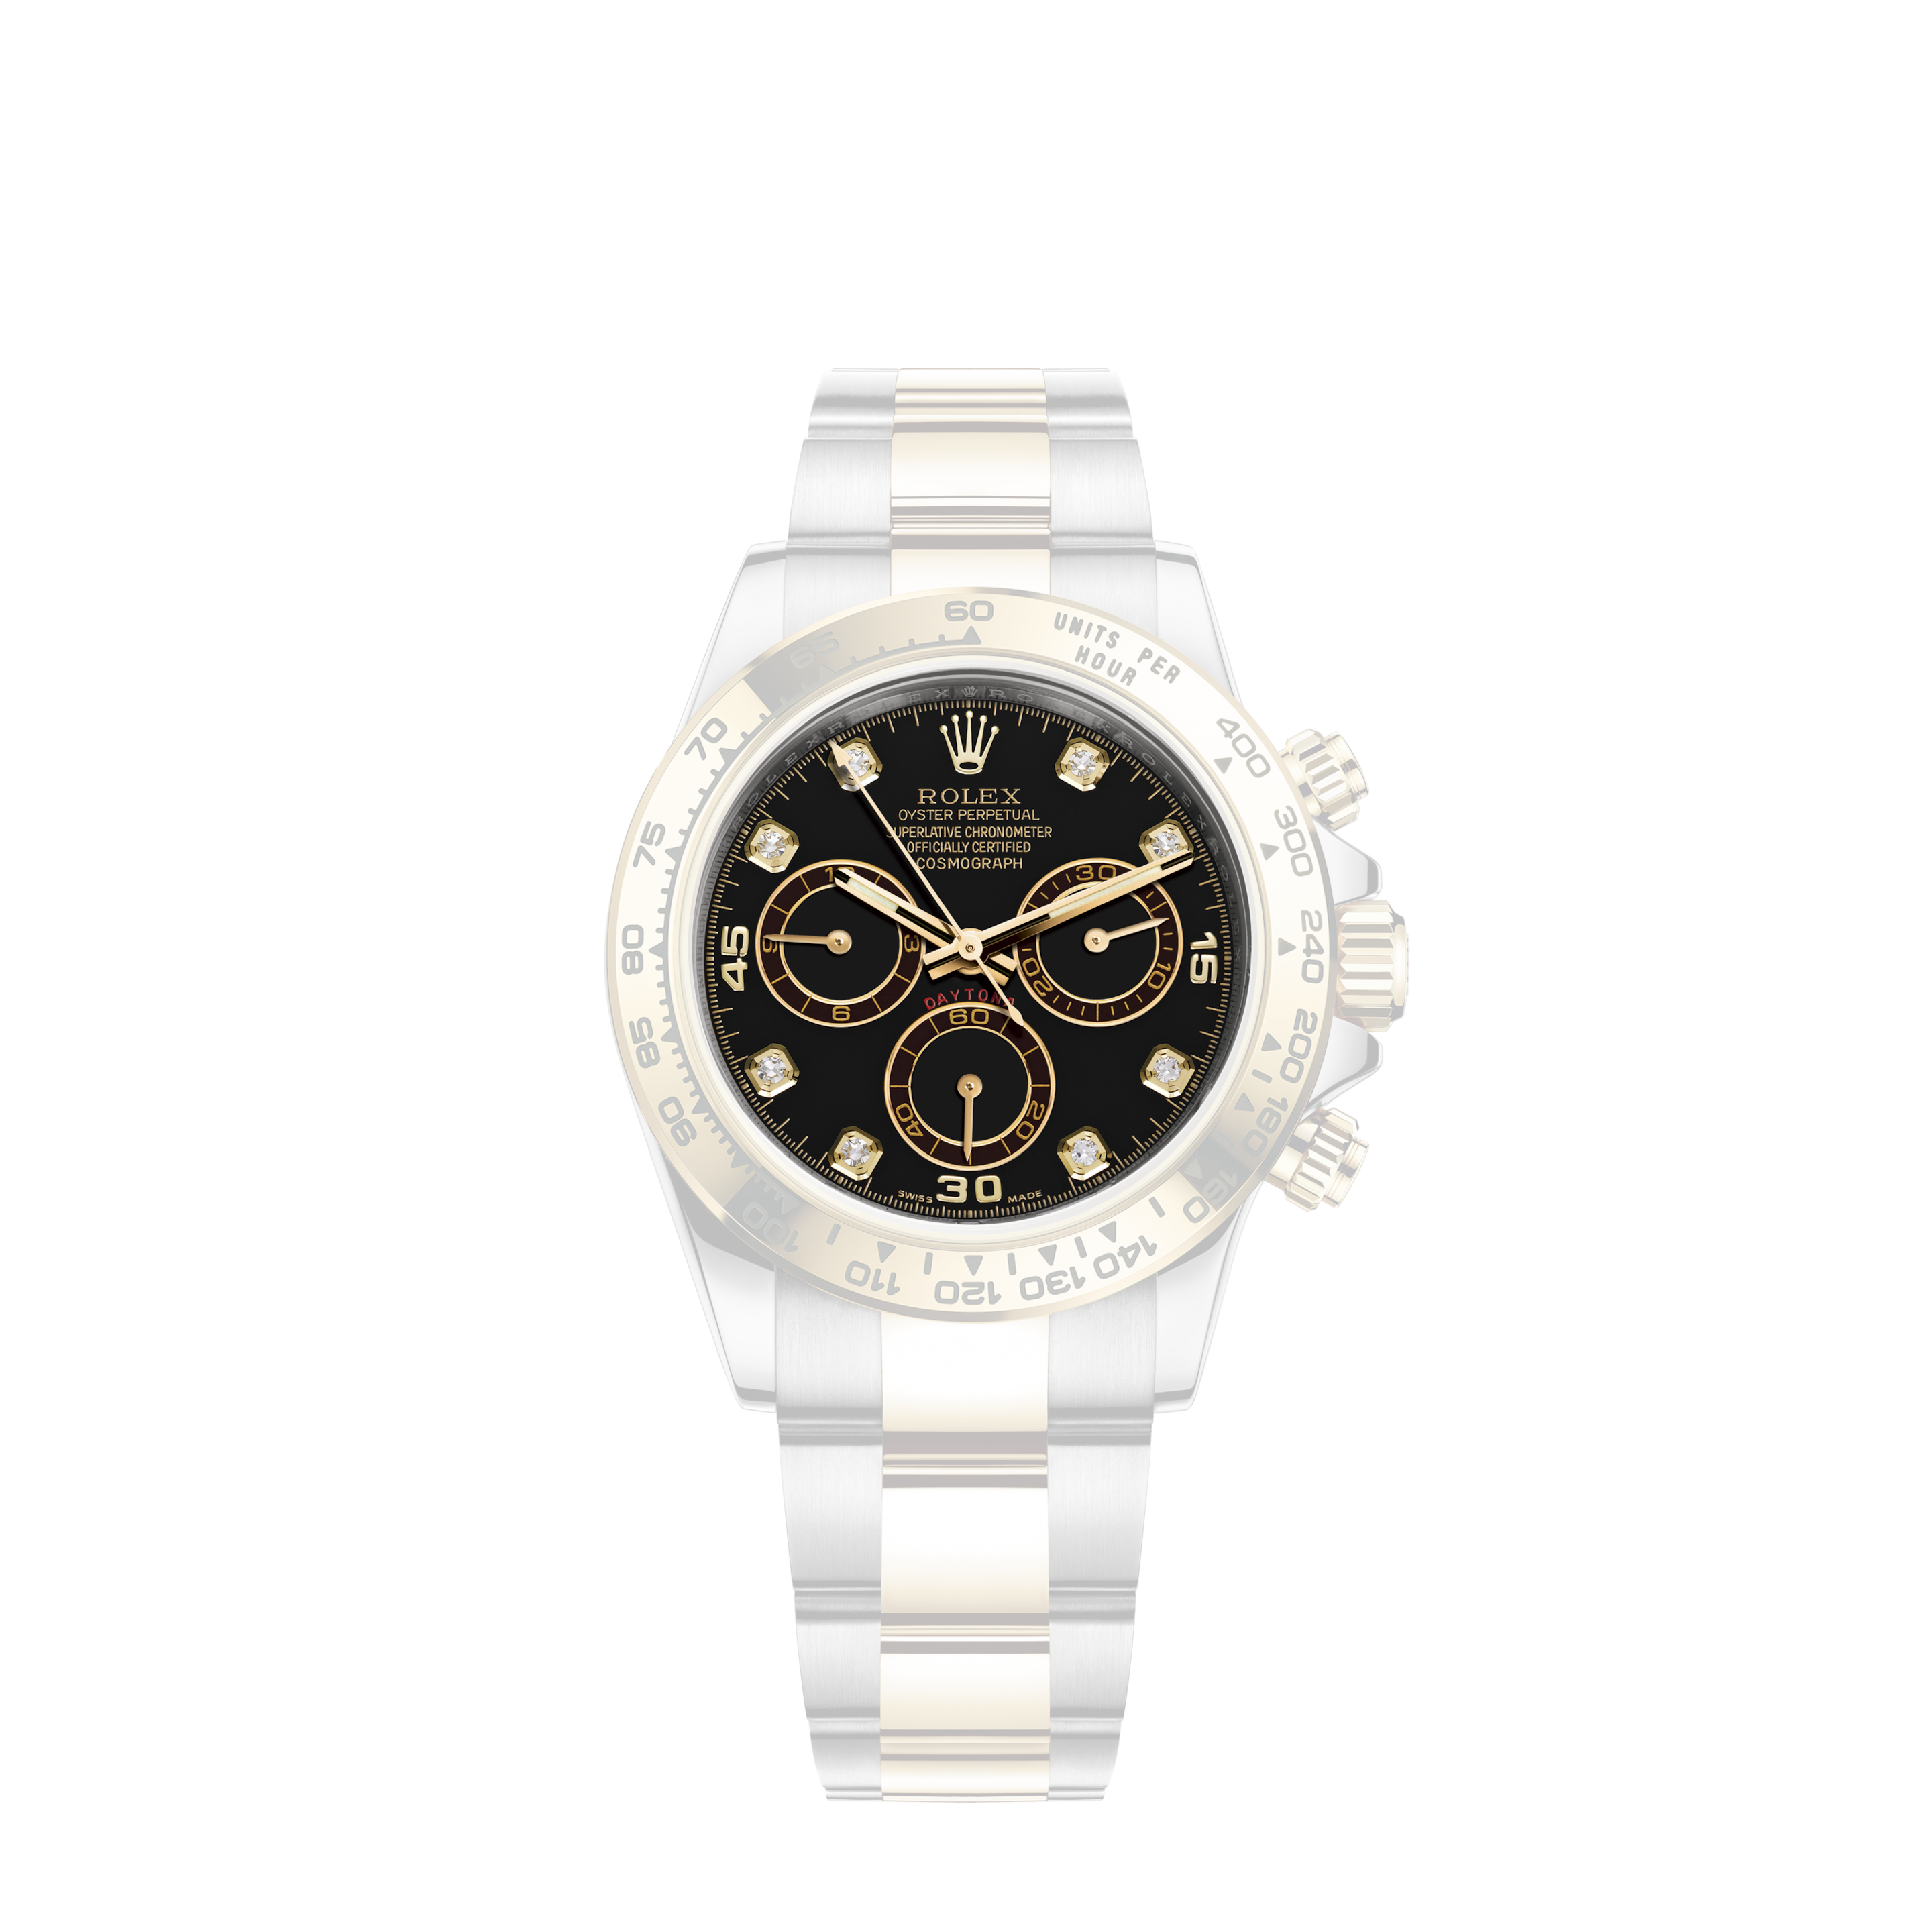 Rolex Ladies Oyster Perpetual 2-Tone Watch 67243Rolex Ladies Oyster Perpetual 2-Tone Watch 76193